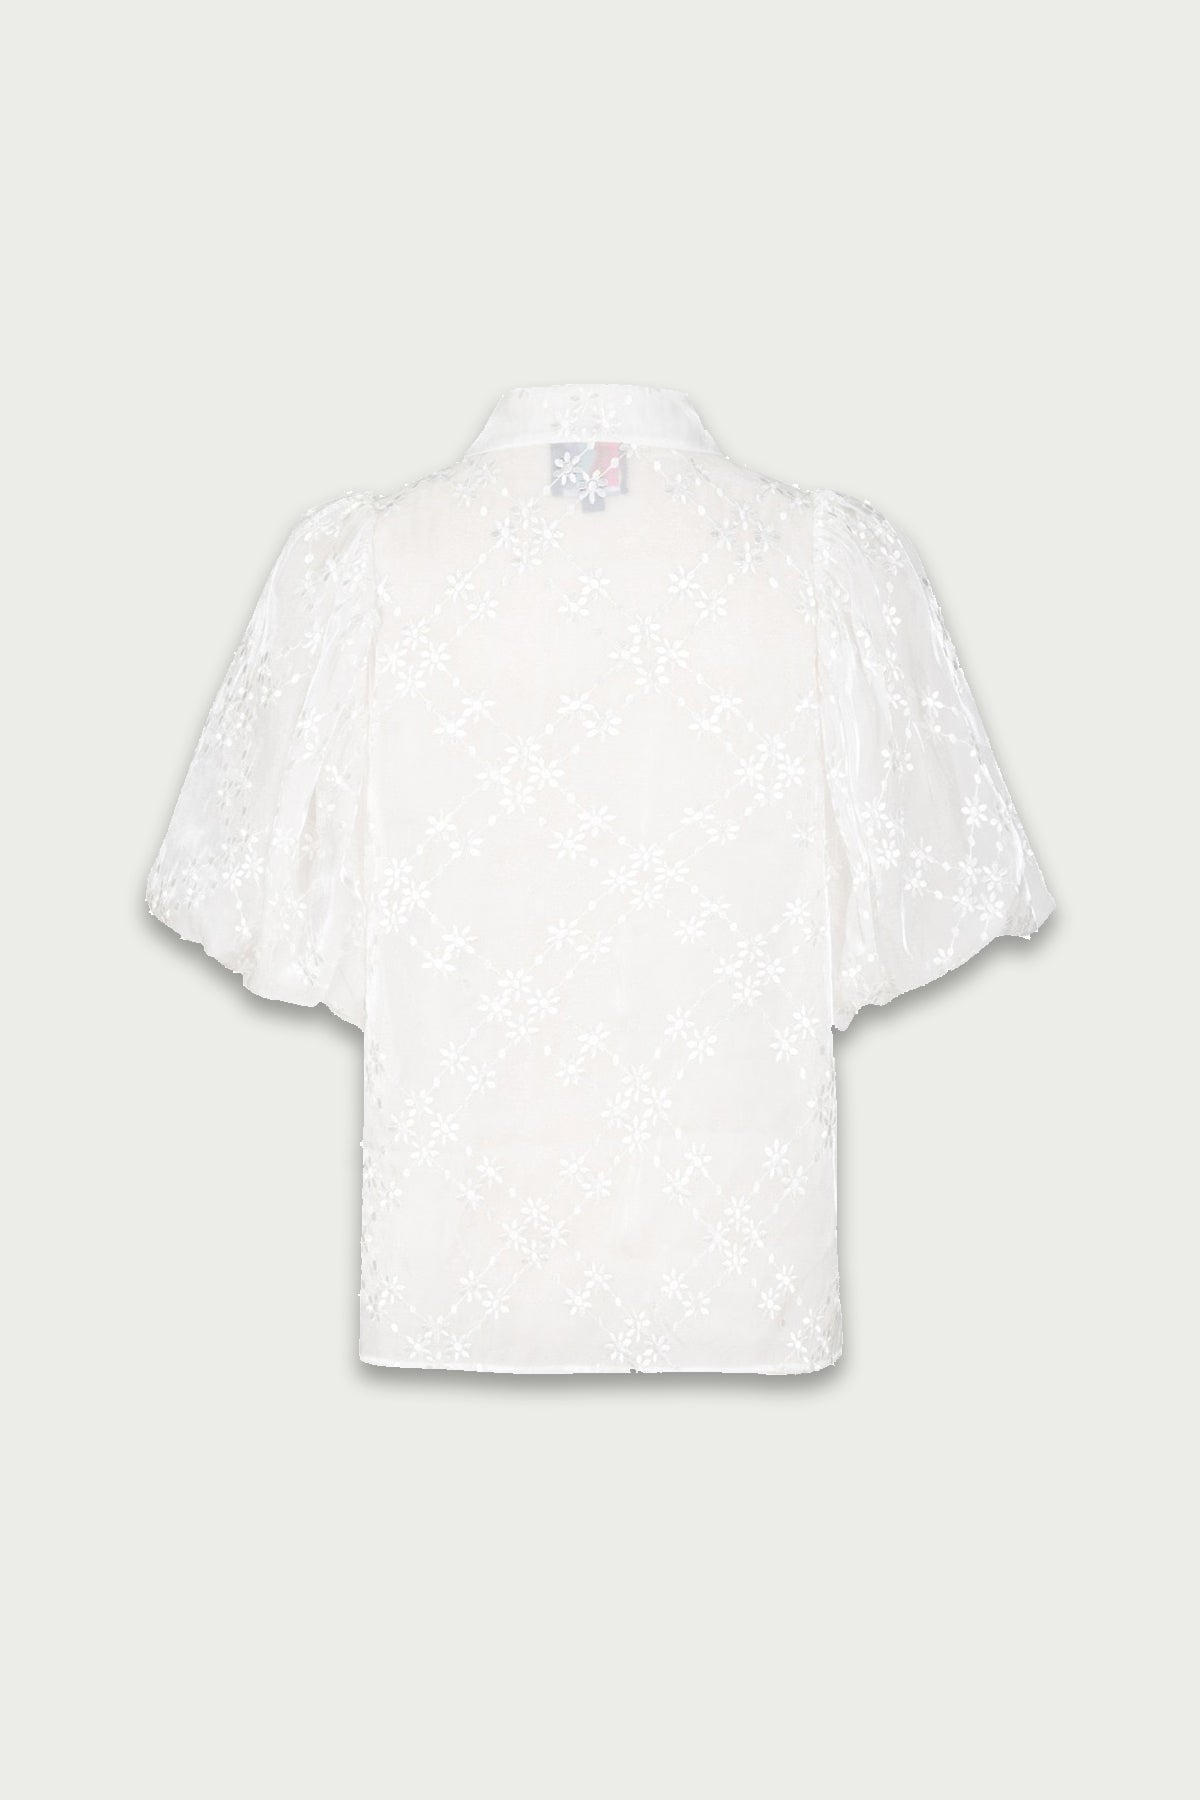 Mukzin | Lapel Sheer Floral White Chiffon shirt - 囍XI